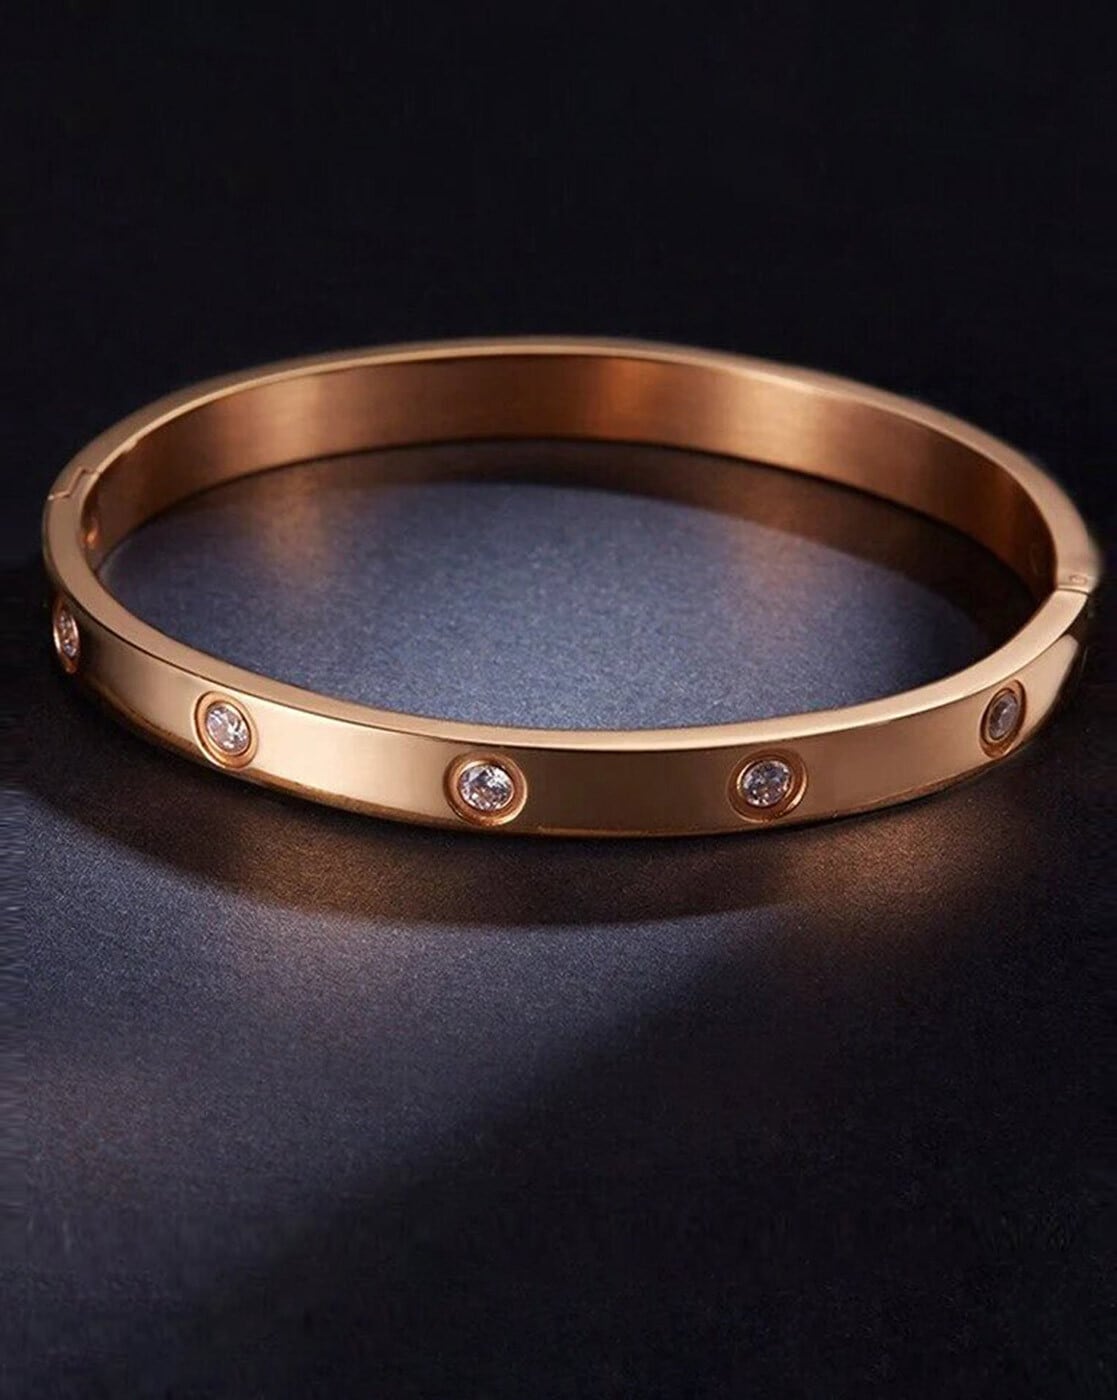 Details more than 81 copper bangle bracelet latest